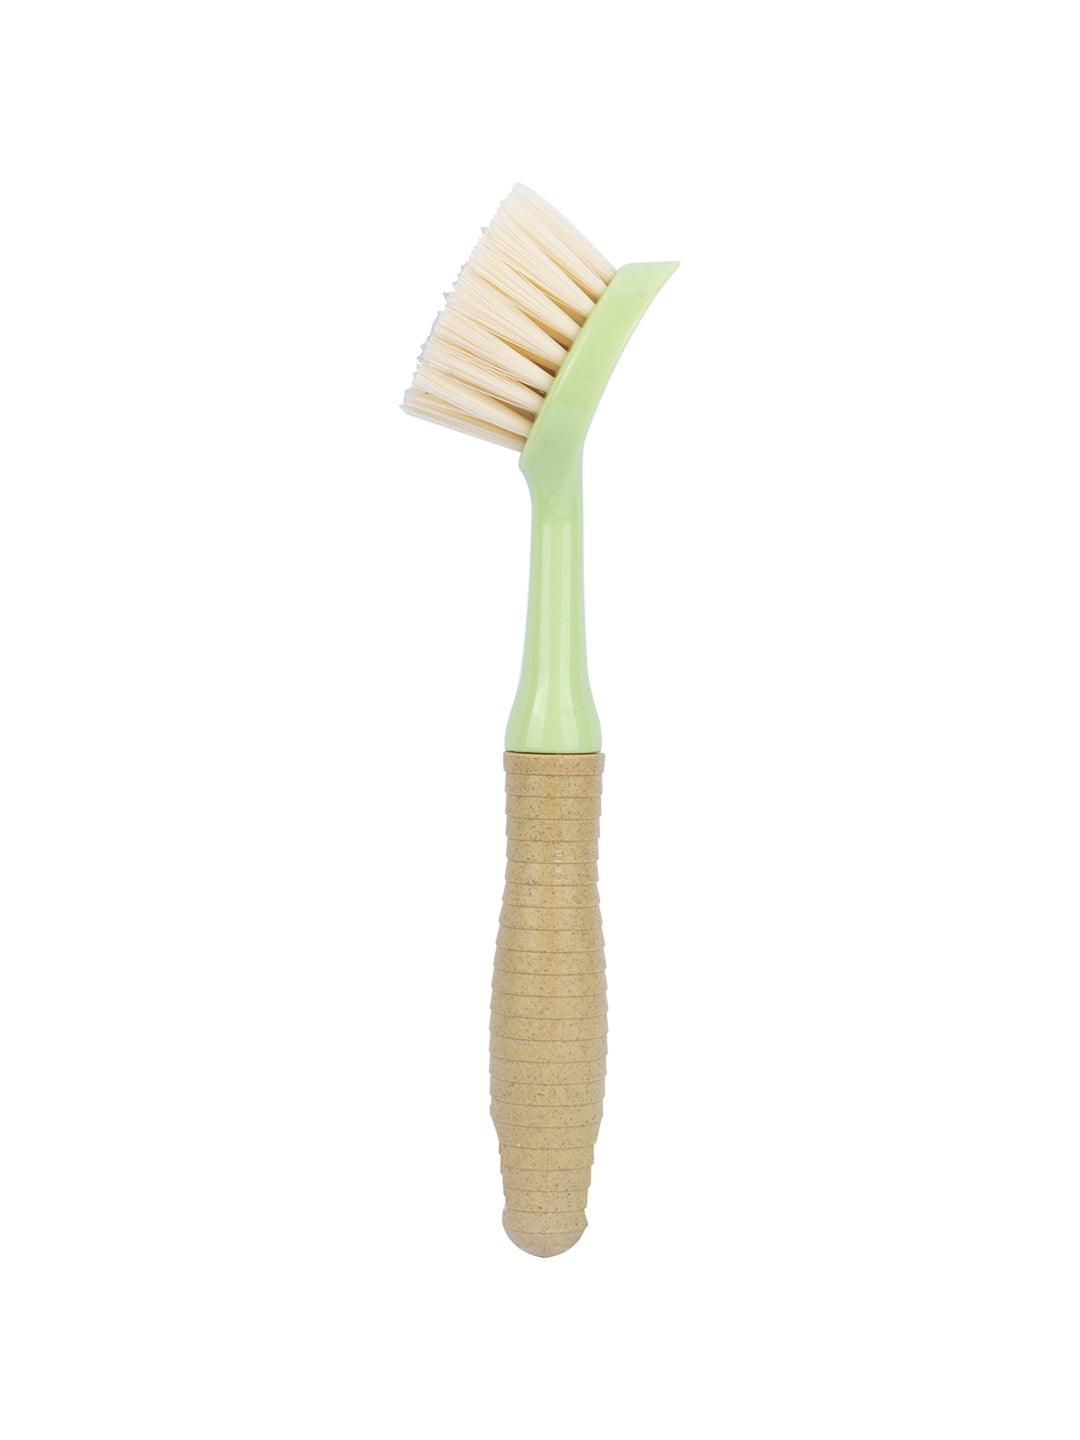 Market 99 Cleaning Brush, Colorblock, Green, Plastic - MARKET 99